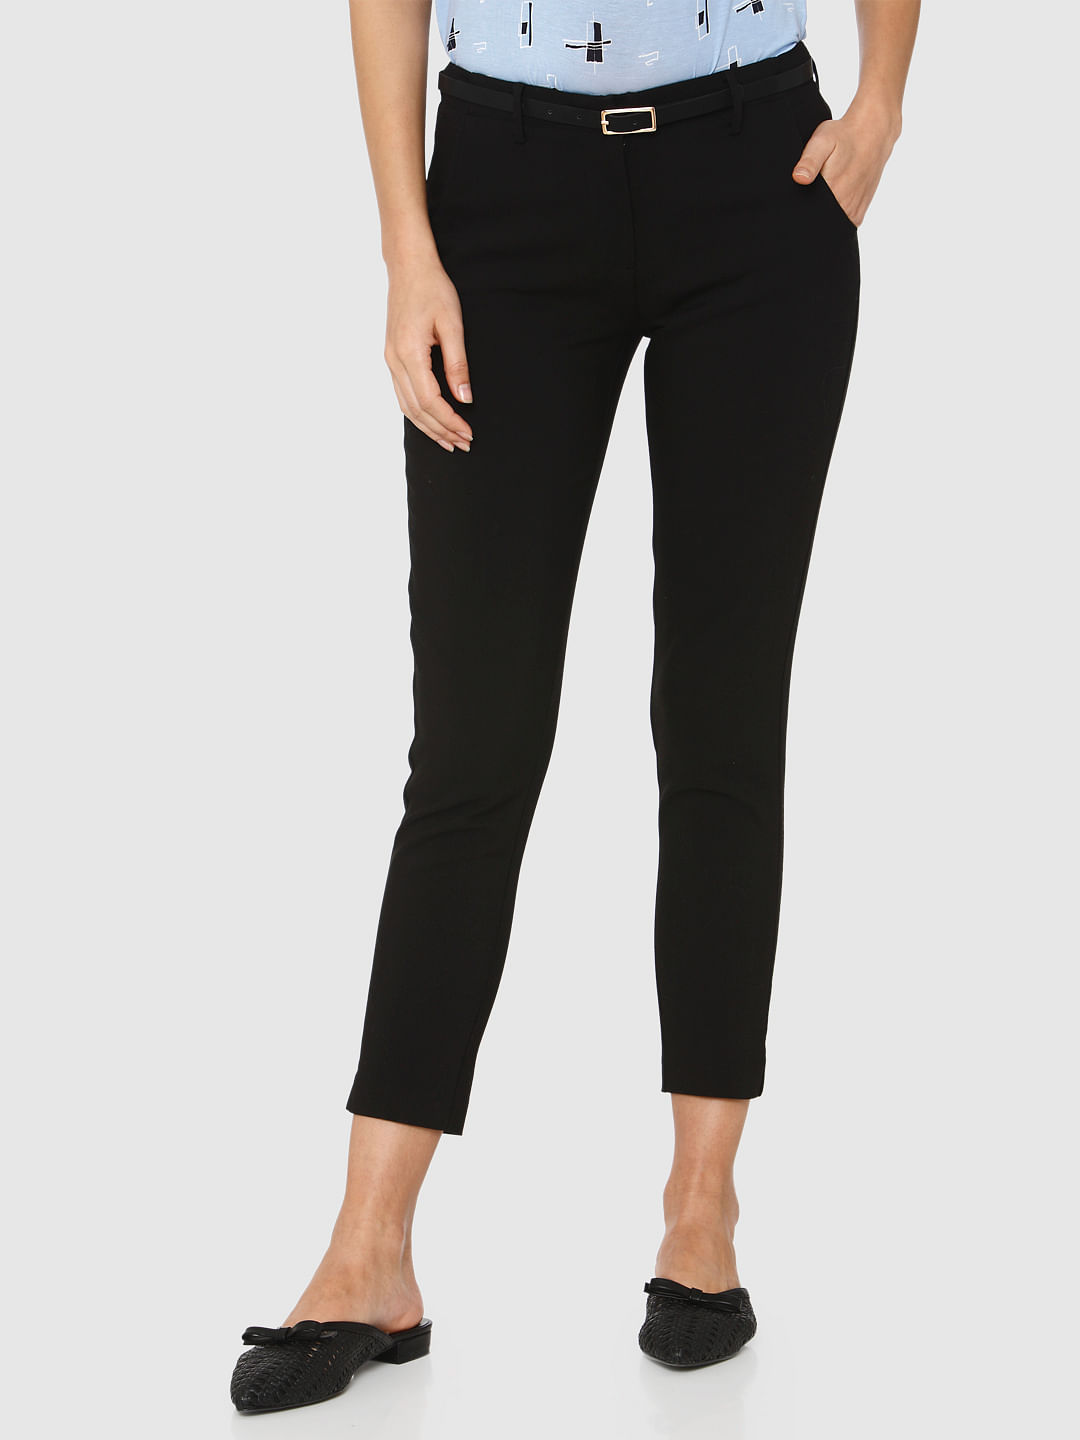 Buy Black Trousers  Pants for Women by Koton Online  Ajiocom